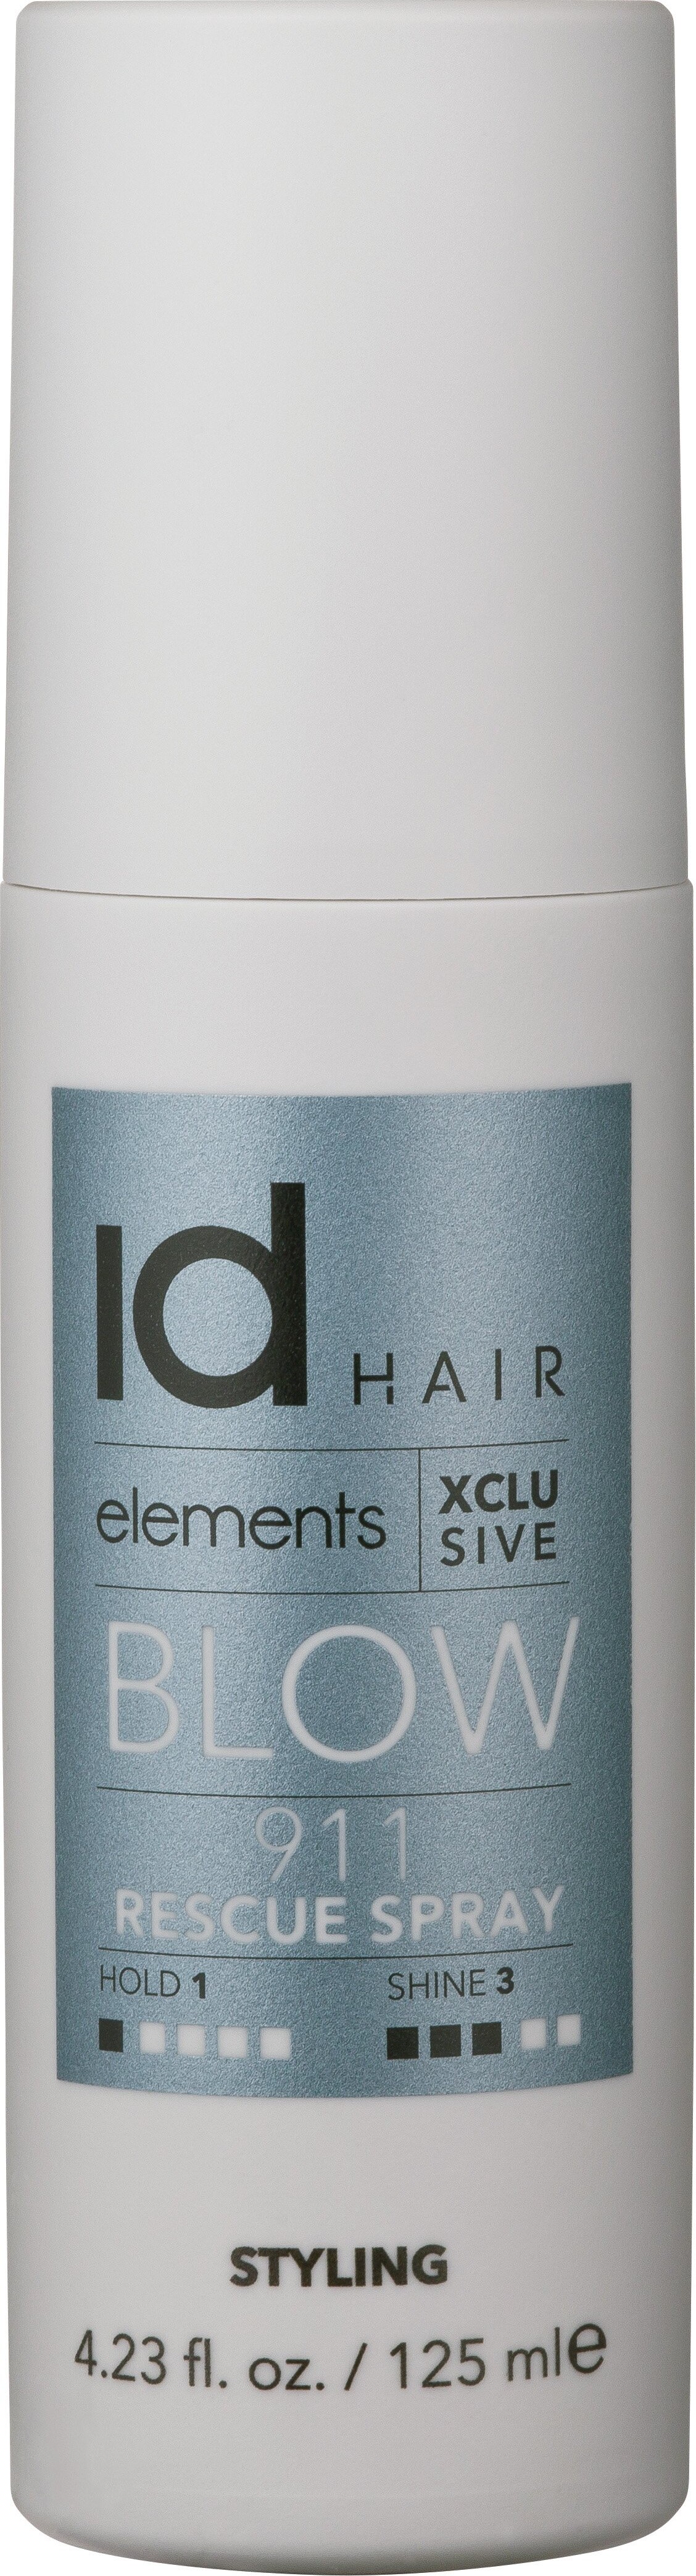 Billede af Id Hair - Elements Xclusive 911 Rescue Spray 125 Ml